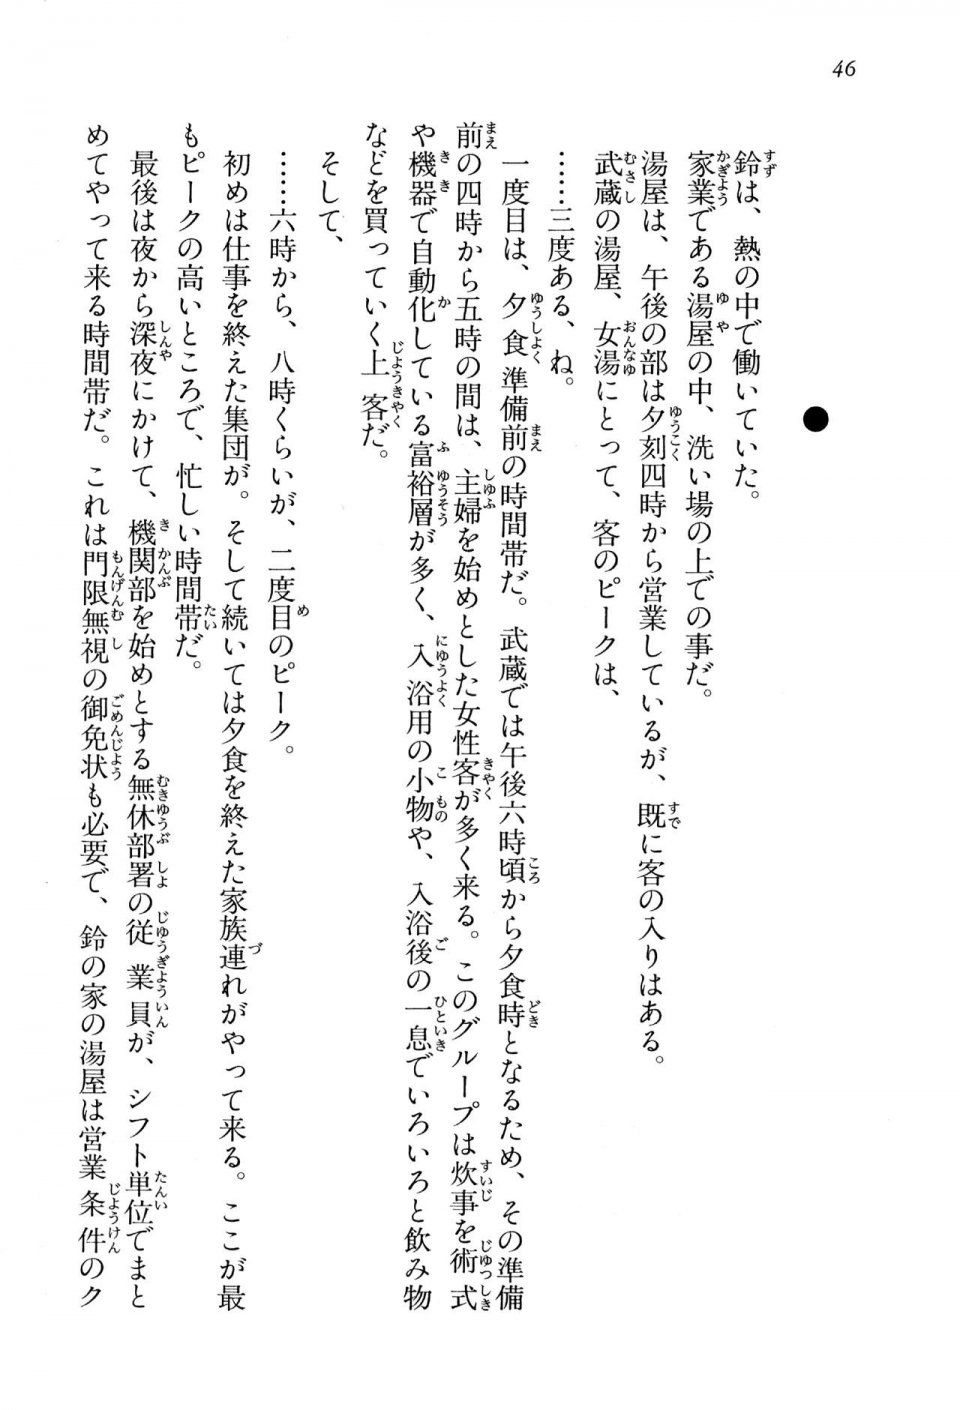 Kyoukai Senjou no Horizon BD Special Mininovel Vol 3(2A) - Photo #50